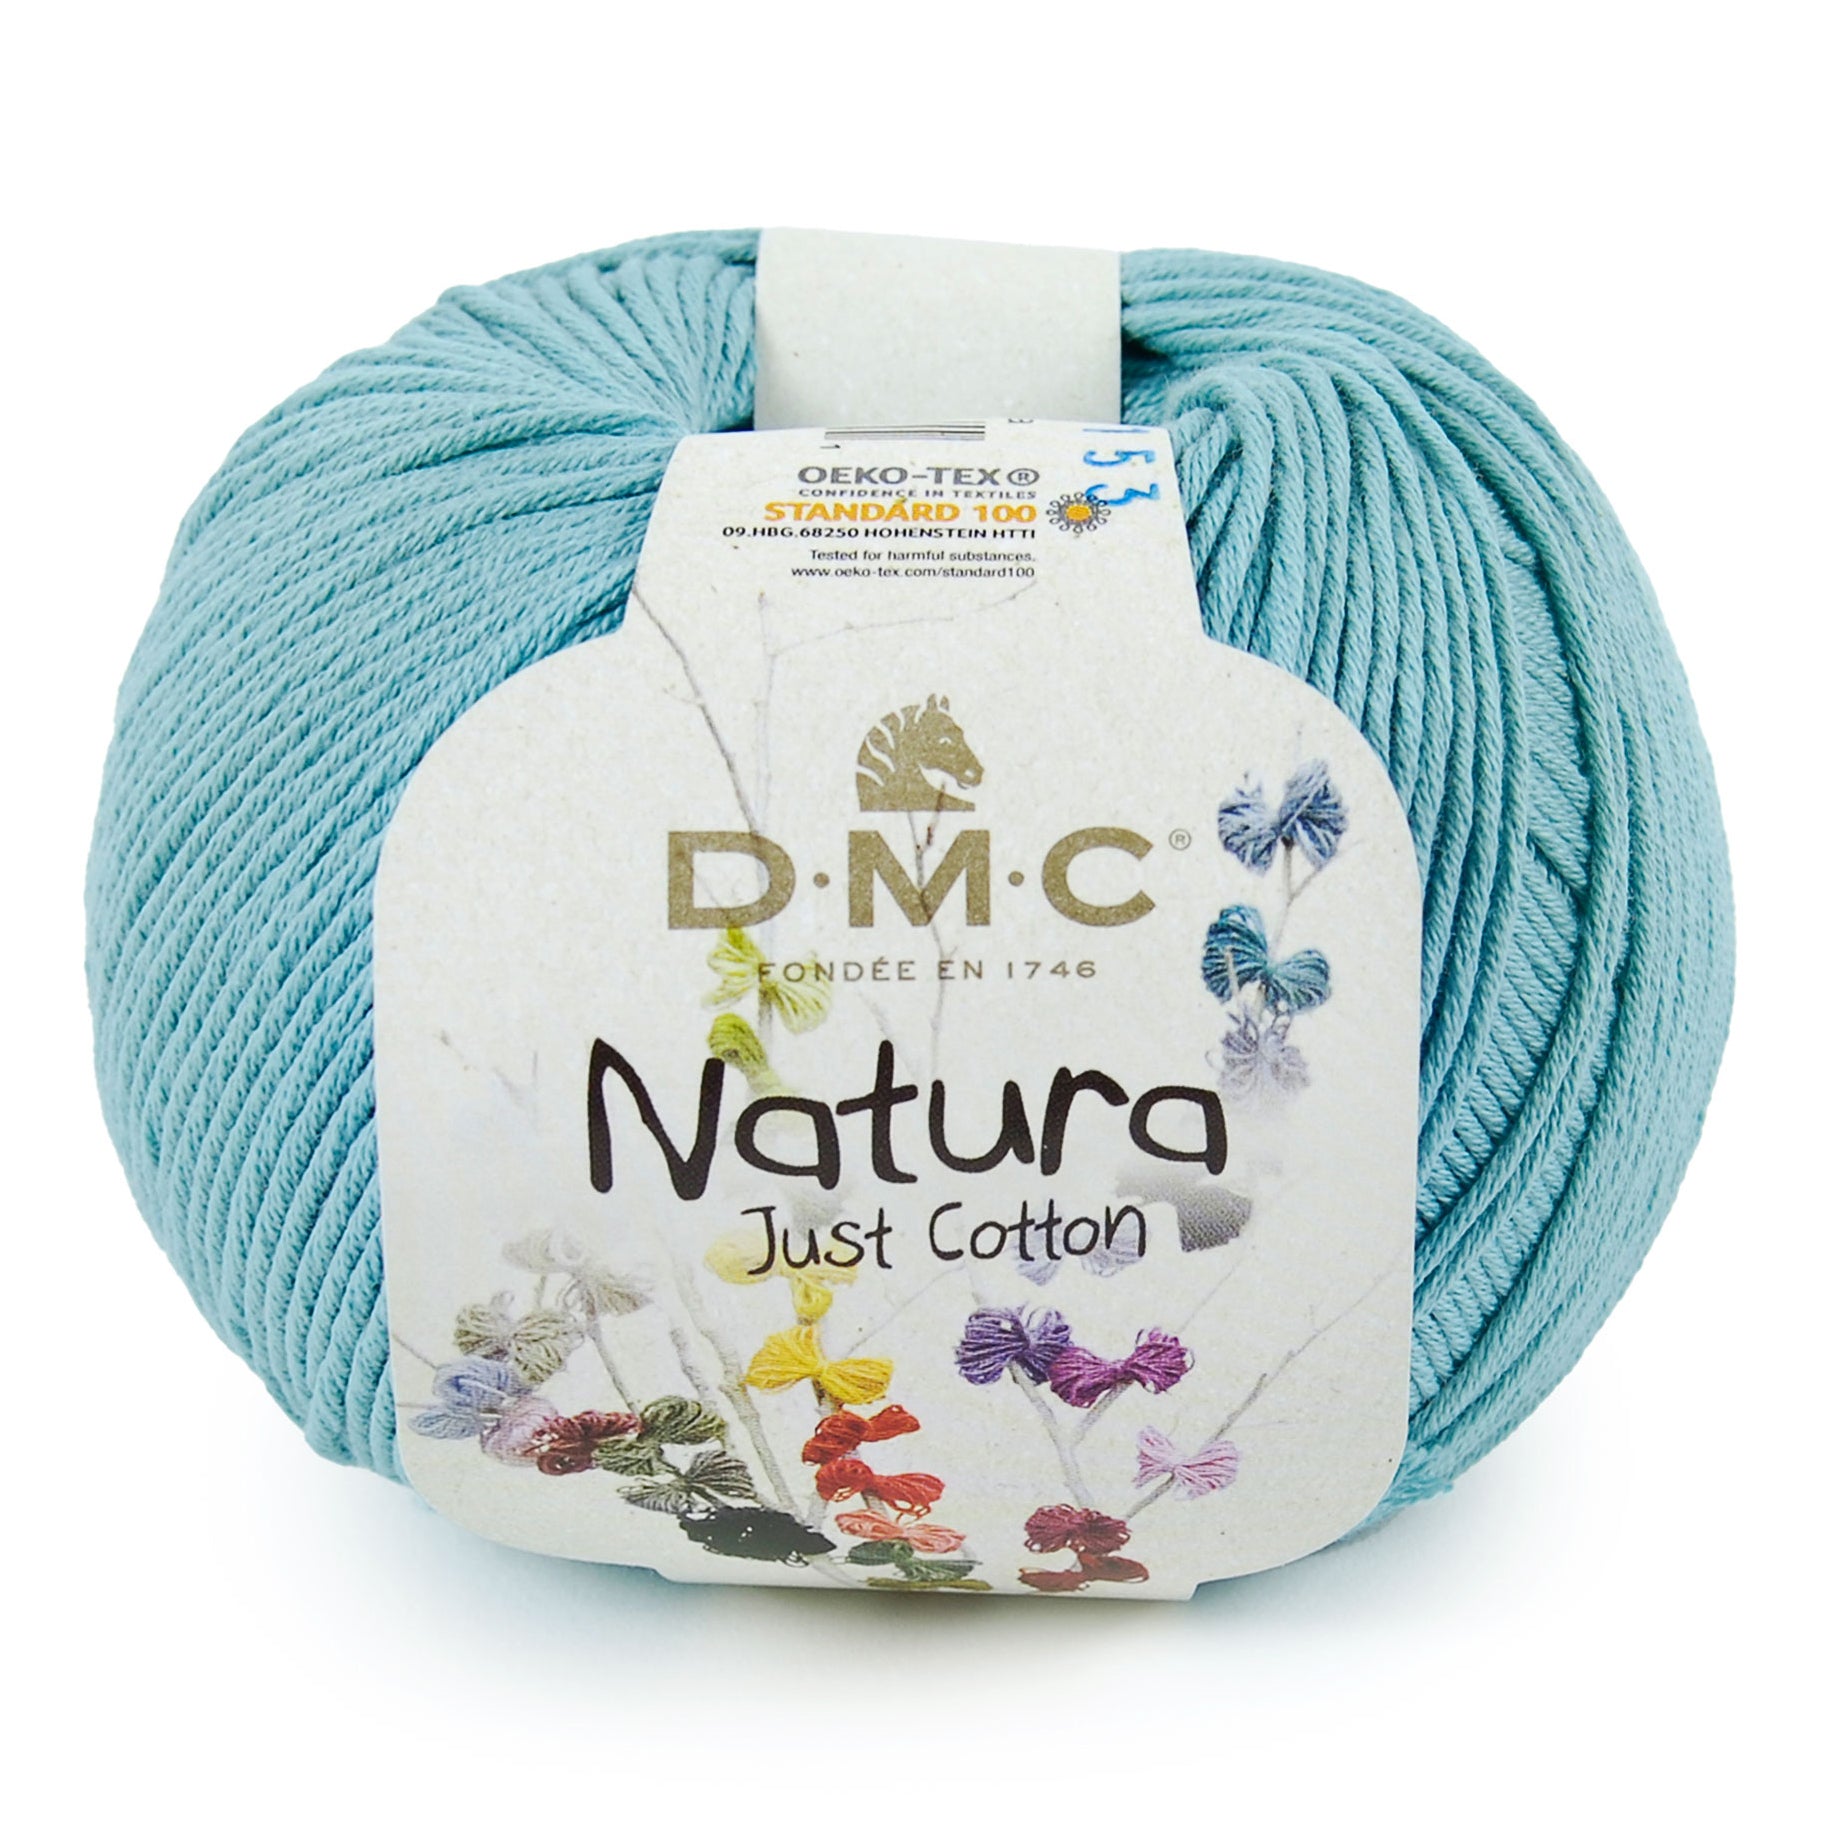 DMC Natura Just Cotton - Hilos para Tricot y Ganchillo 100% Algodon